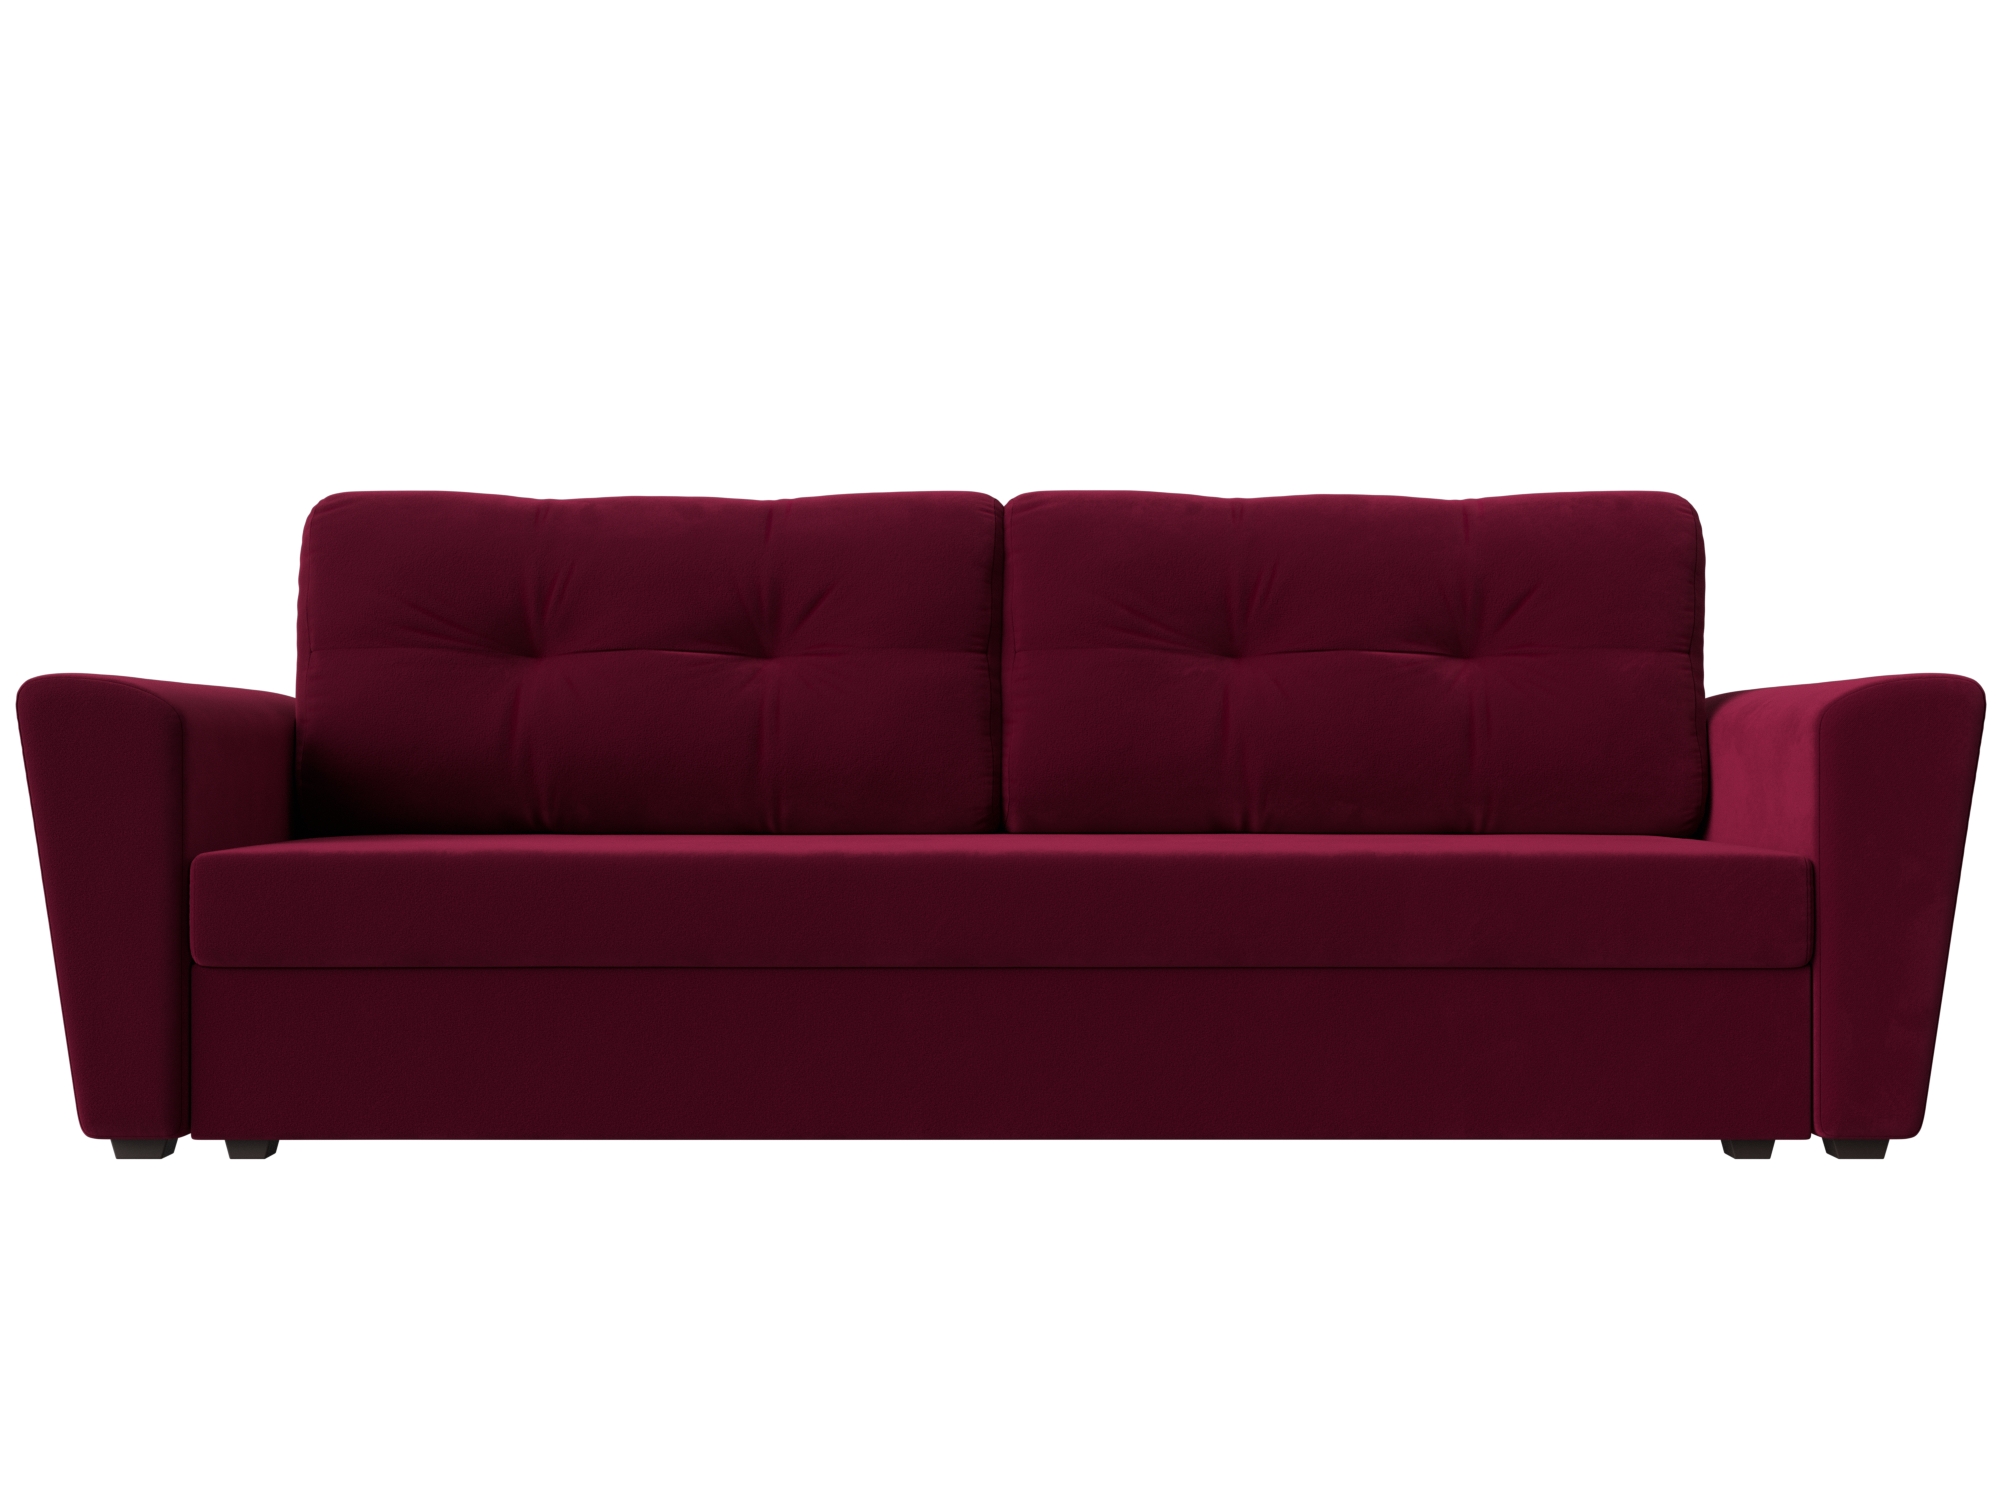 Диван Амстердам MebelVia Красный, Микровельвет, ЛДСП диван еврокнижка мебелико ник 2 микровельвет красный